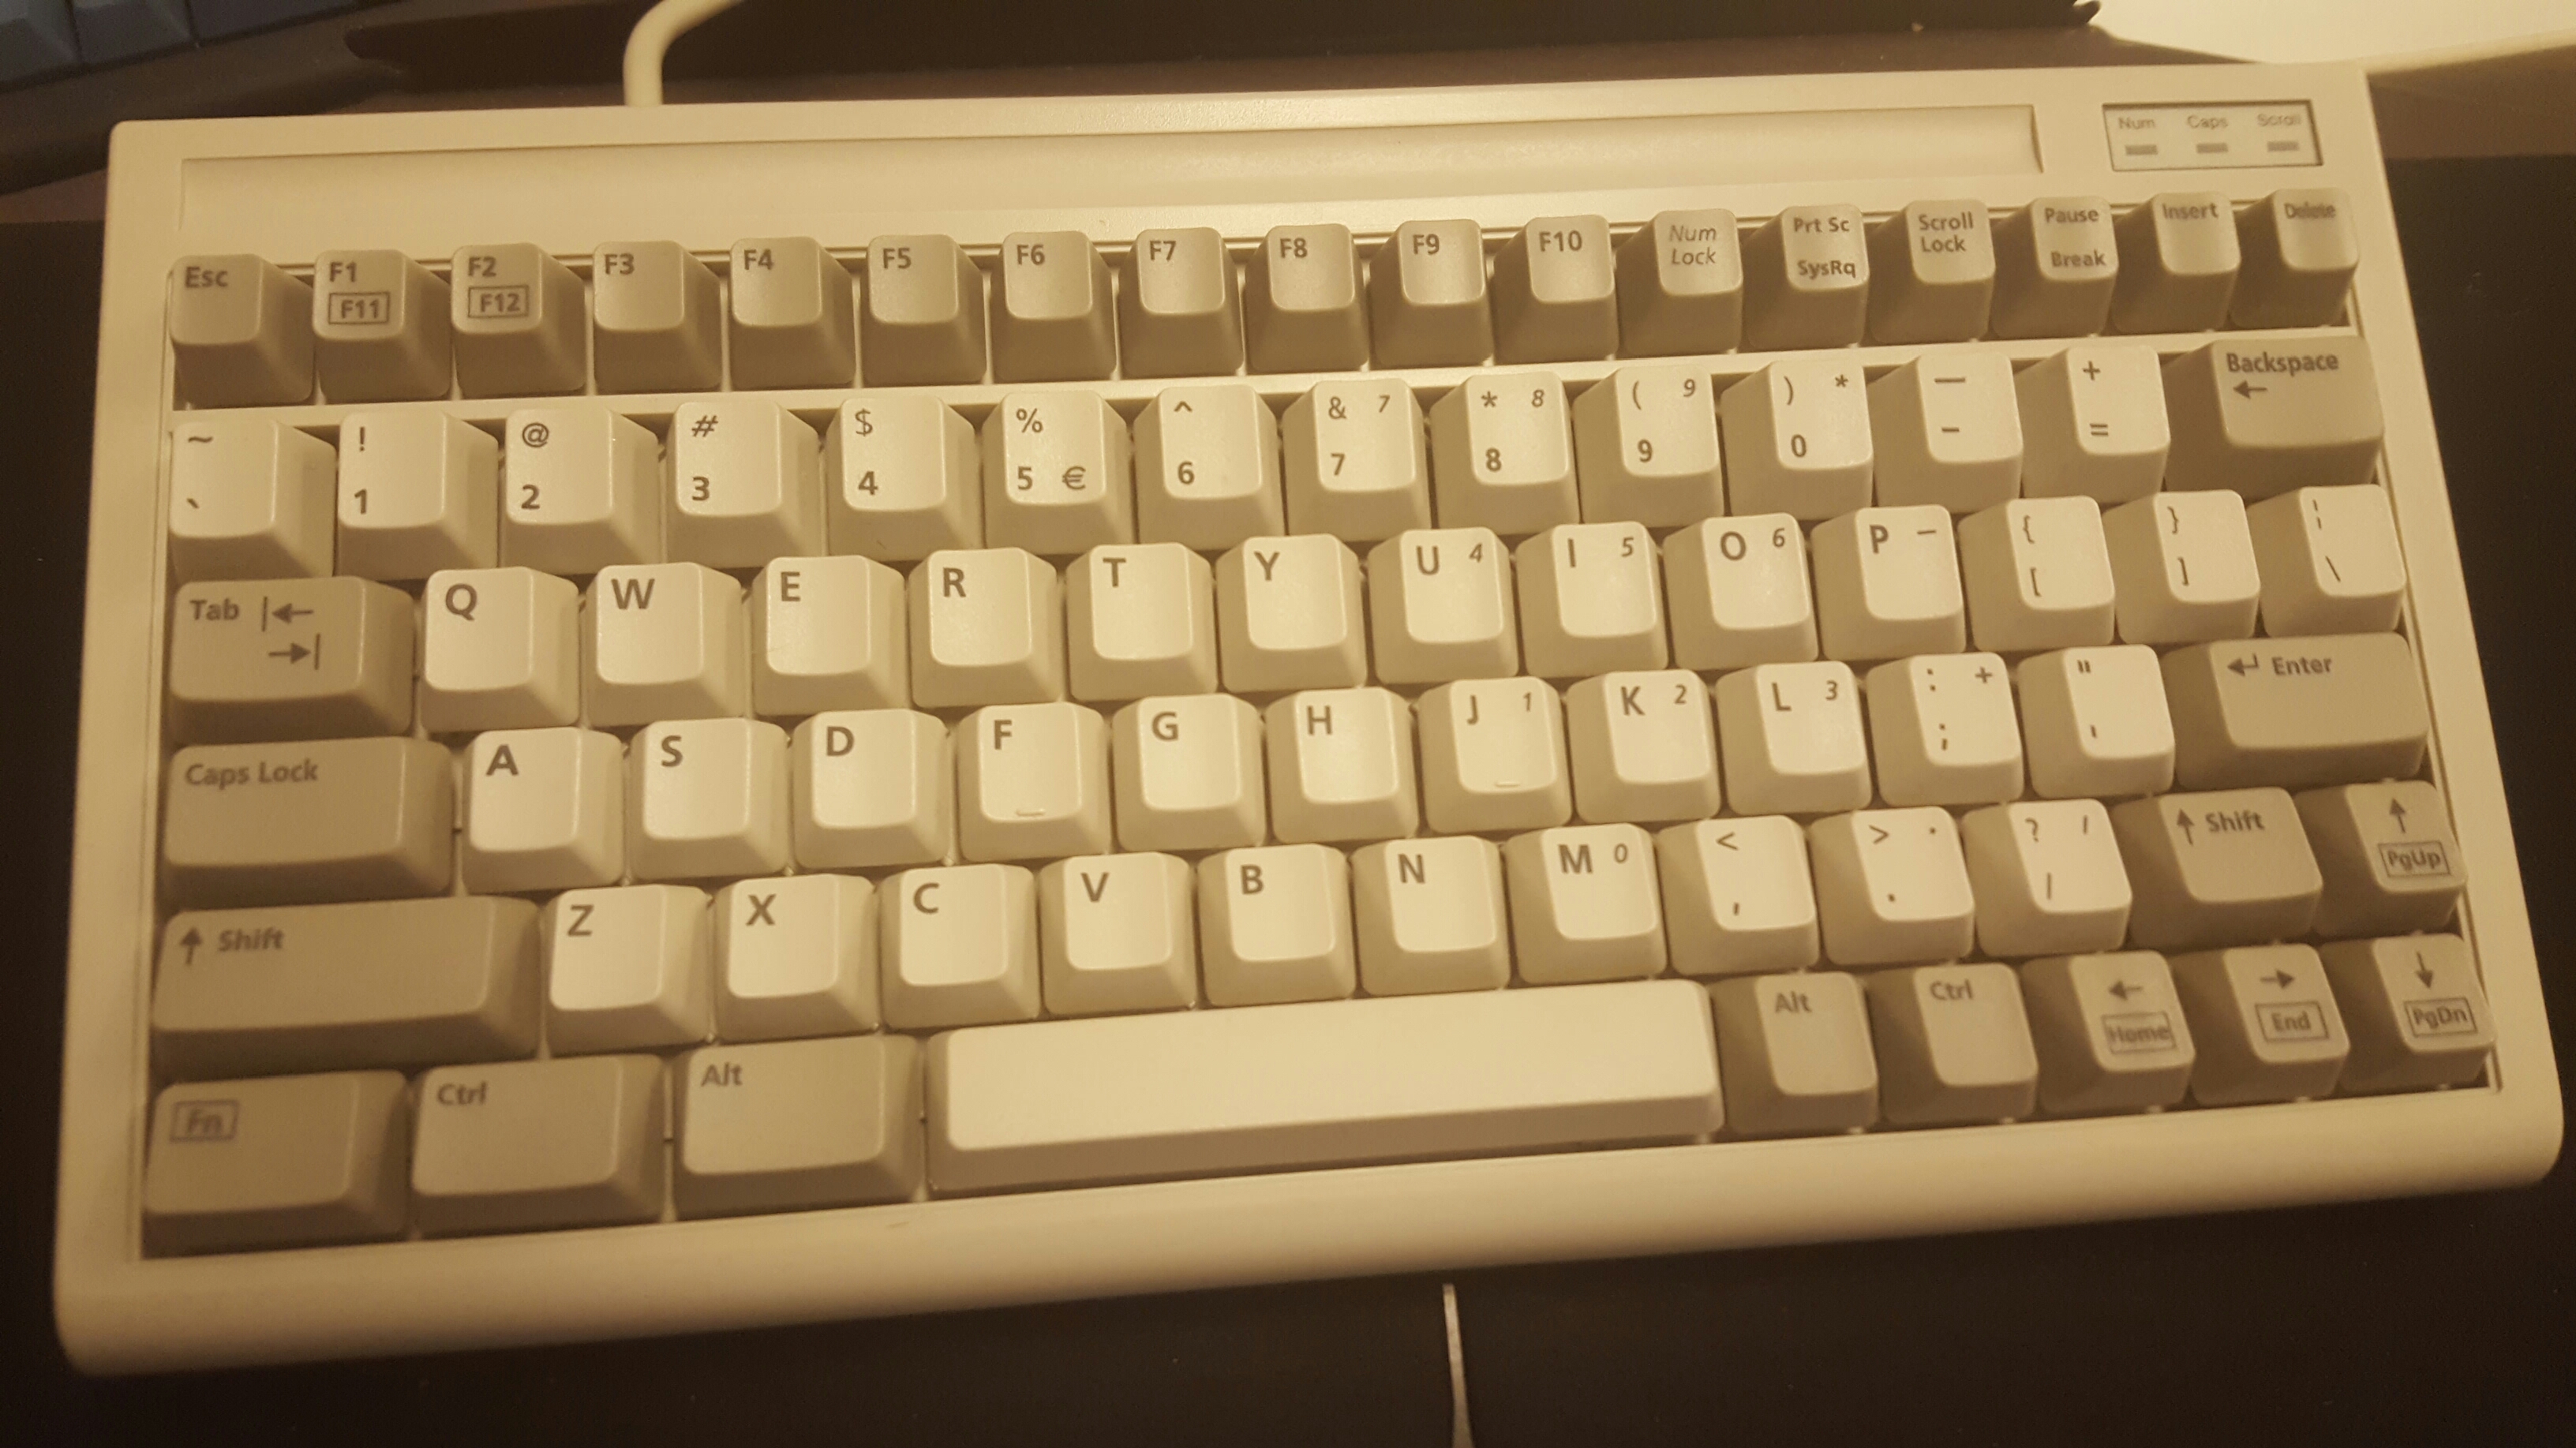 btc 5100c keyboard